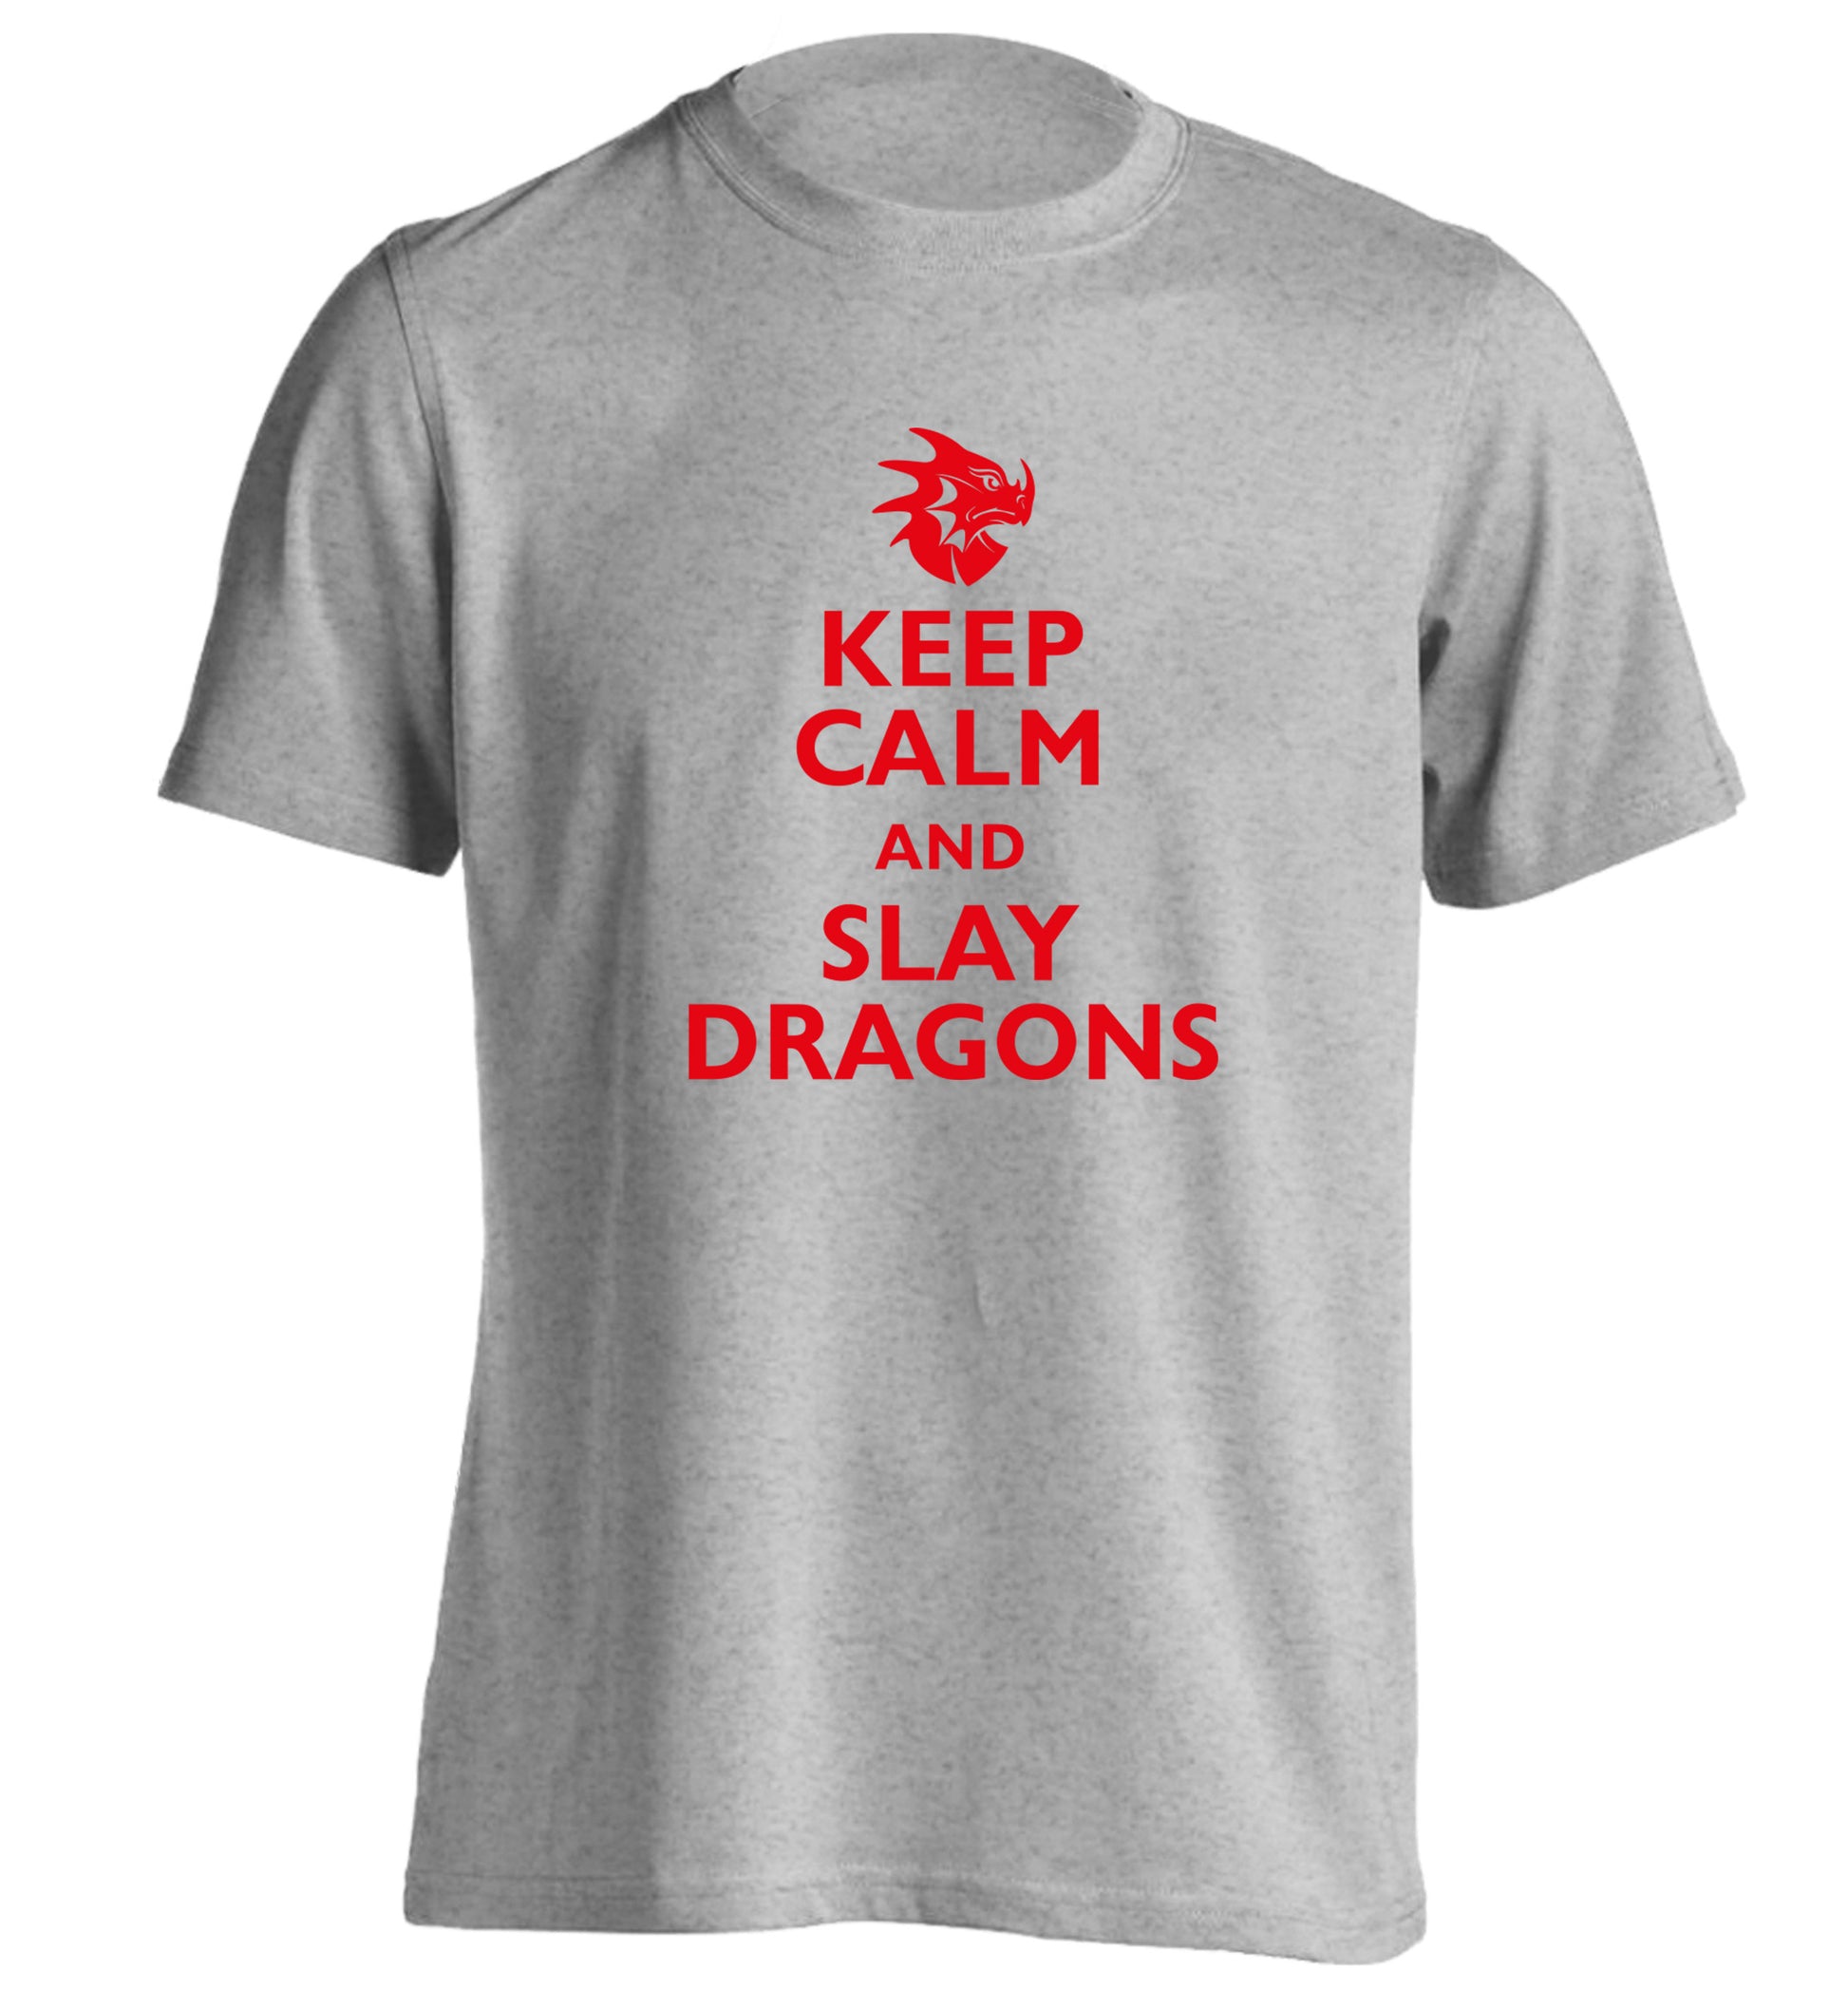 Keep calm and slay dragons adults unisex grey Tshirt 2XL